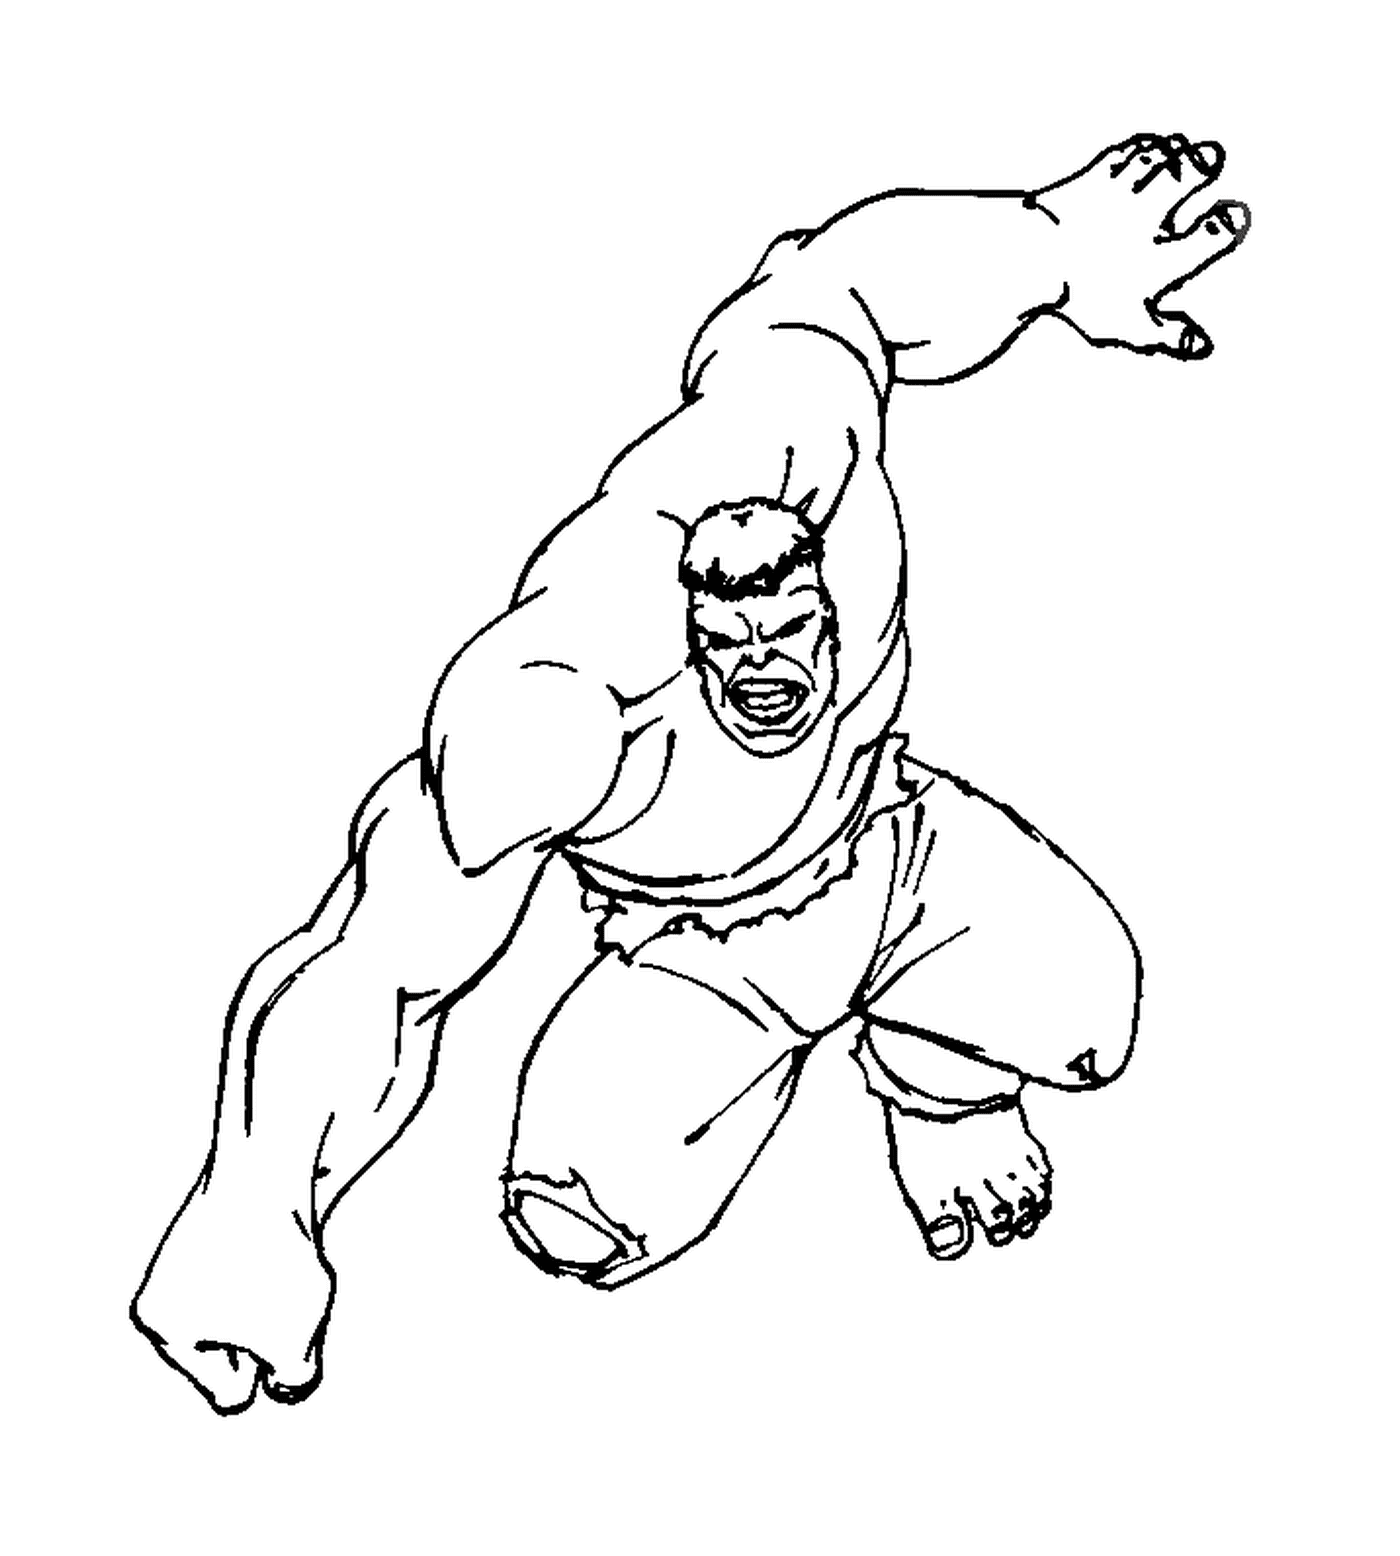   Hulk en plein saut 